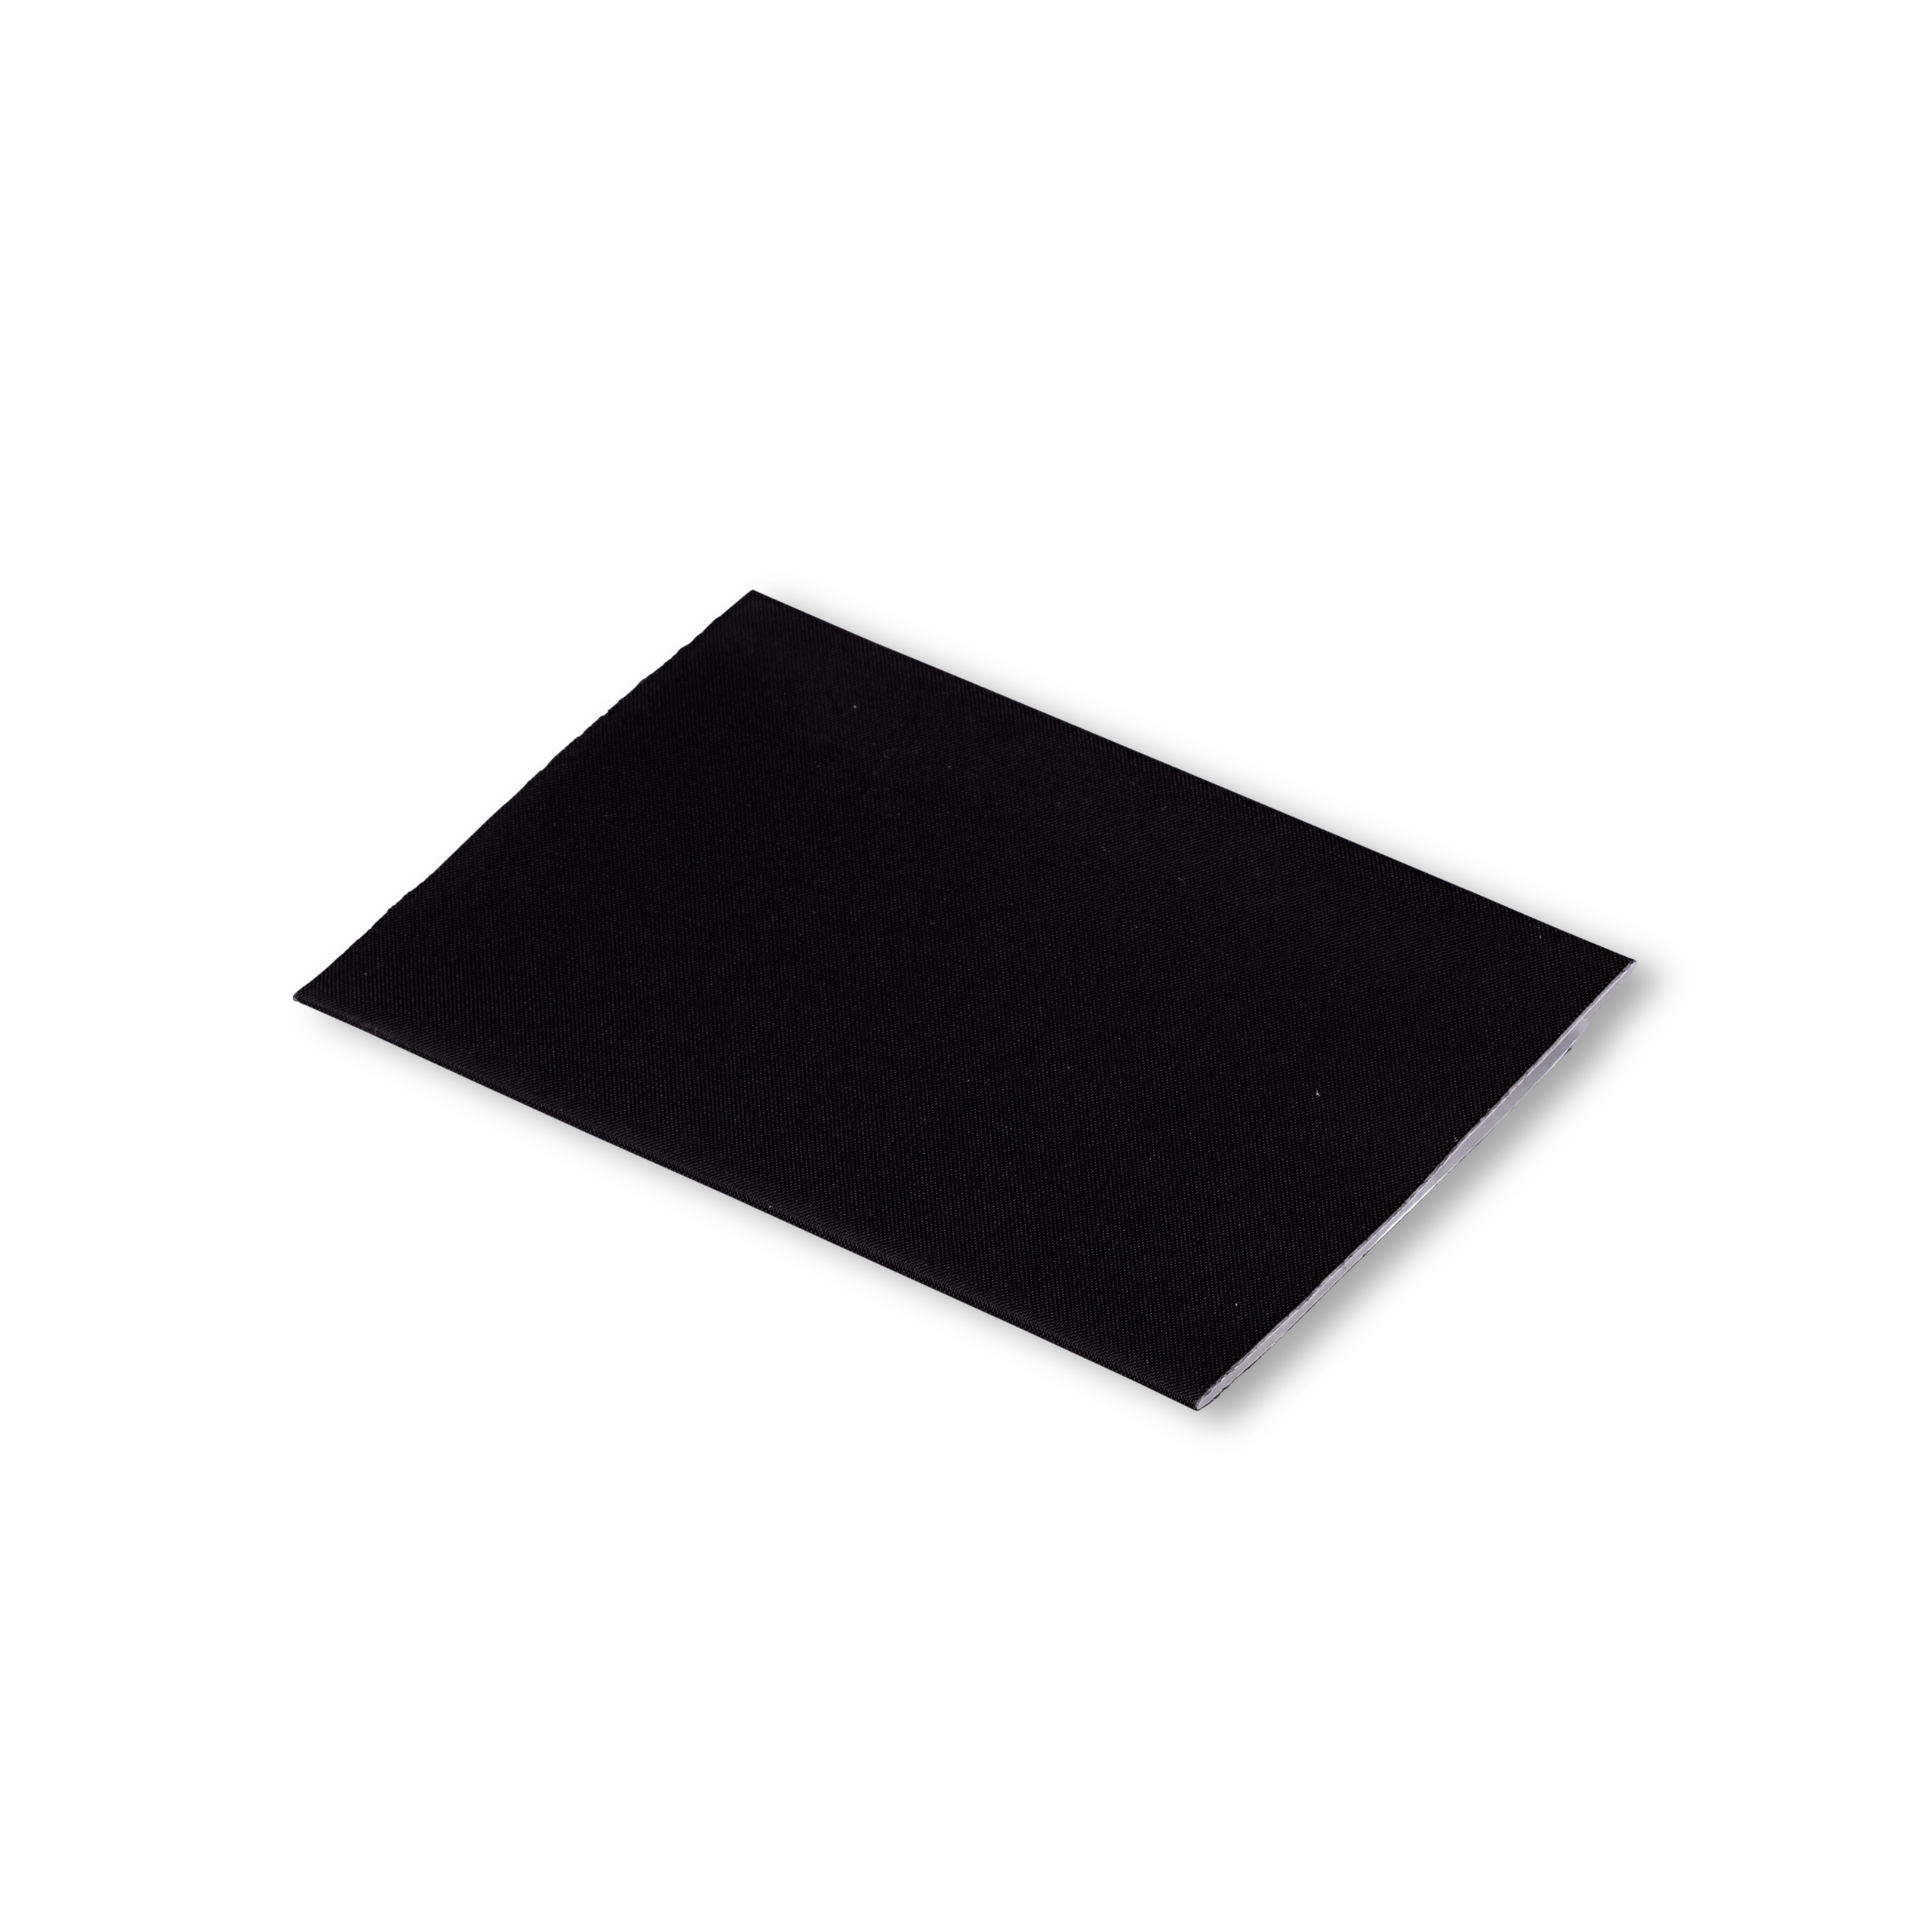 Nylon-Flicken selbstklebend 18 x 10 cm schwarz, 0,018 m² 